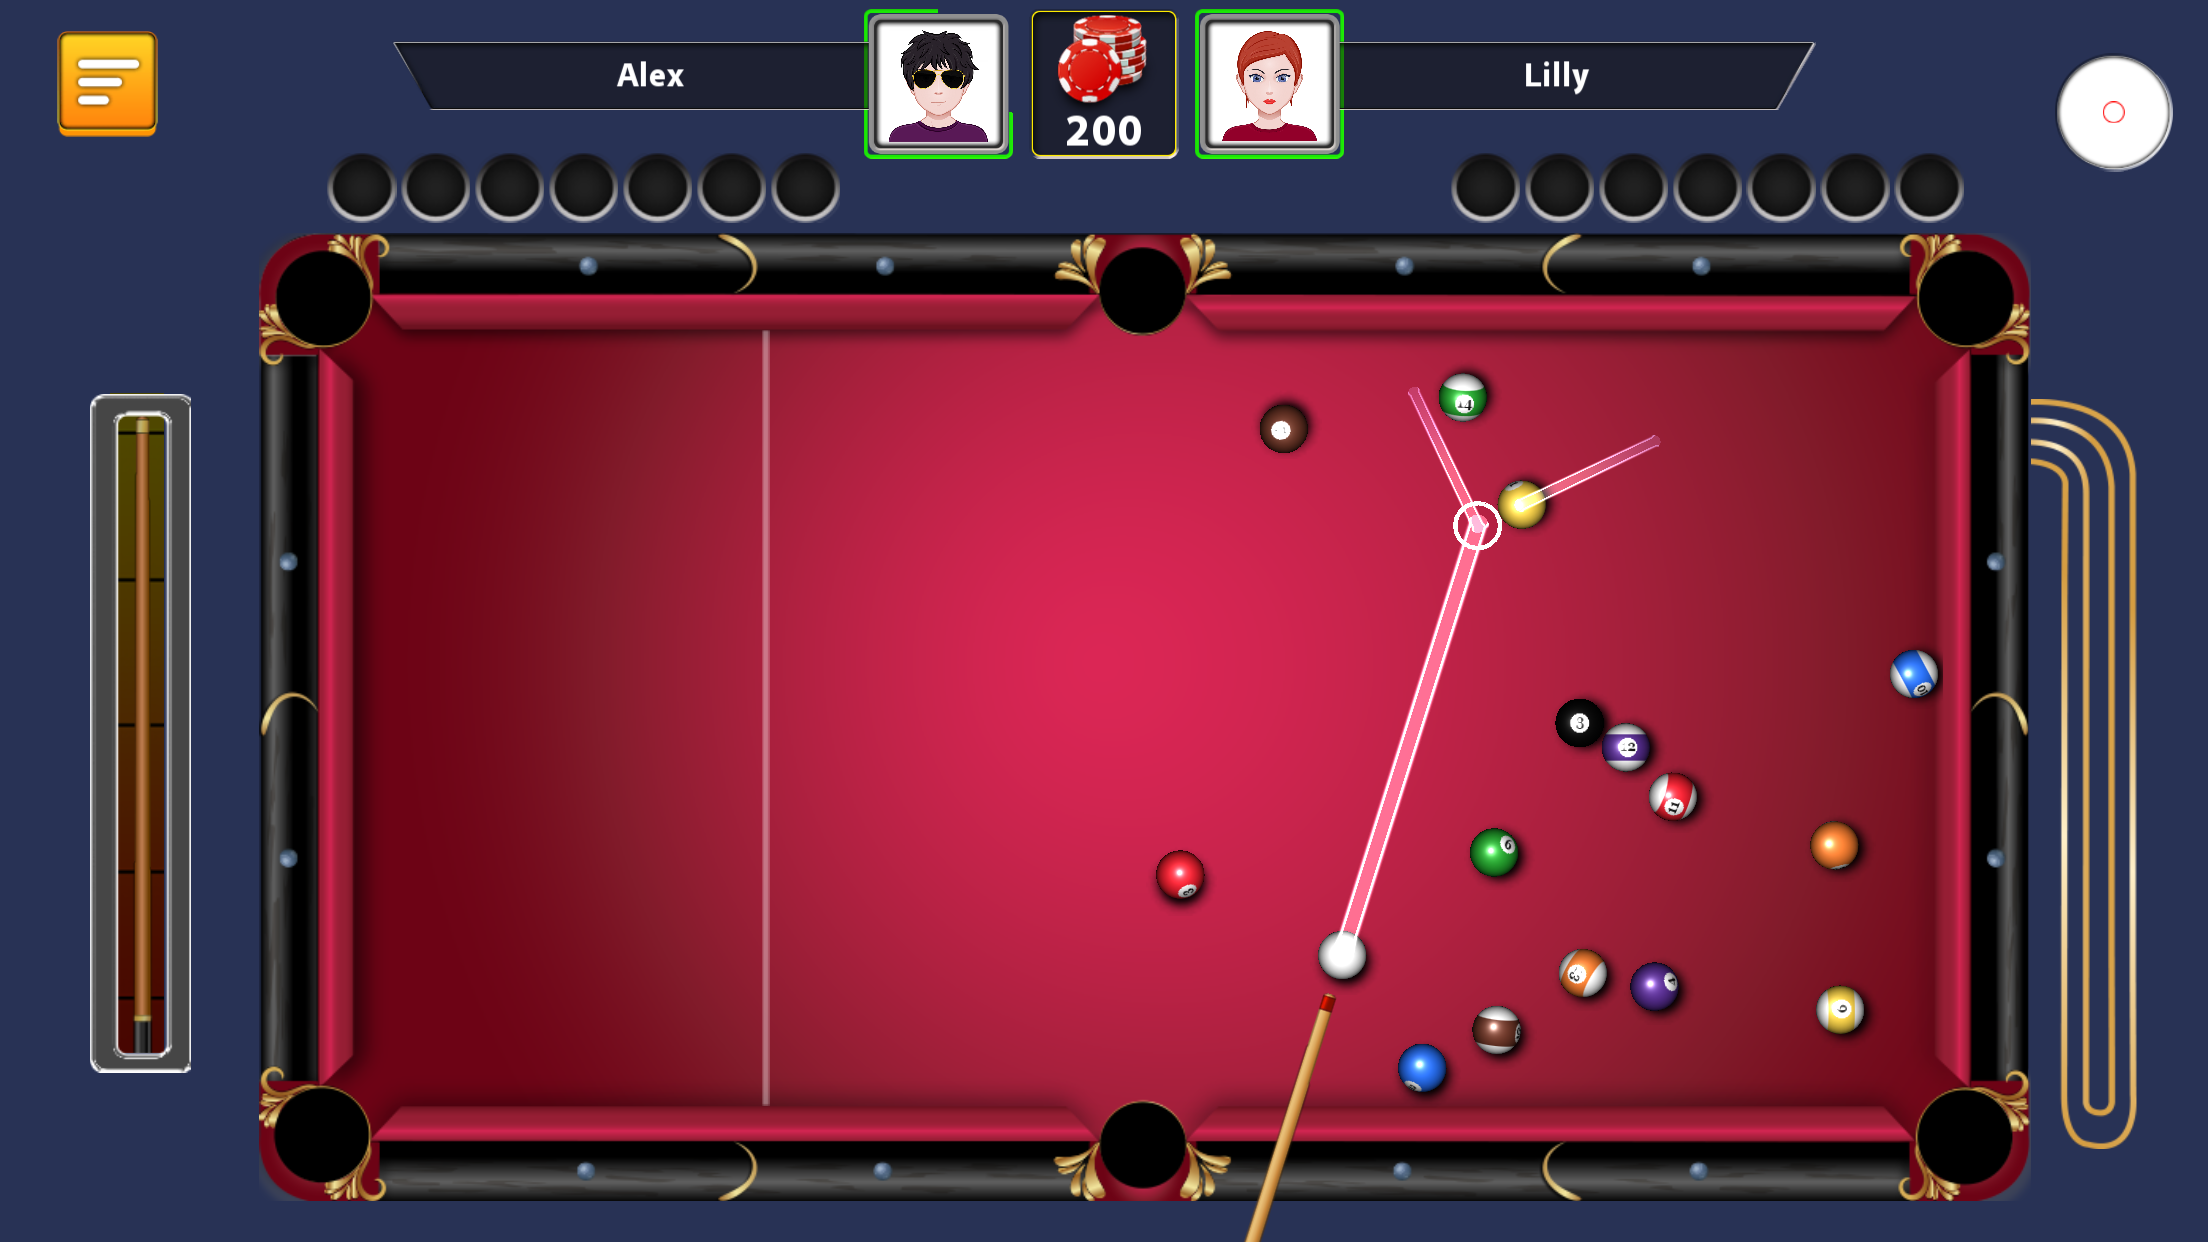 Screenshot 1 of Bintang Bola Biliard: Permainan Pool 3.1